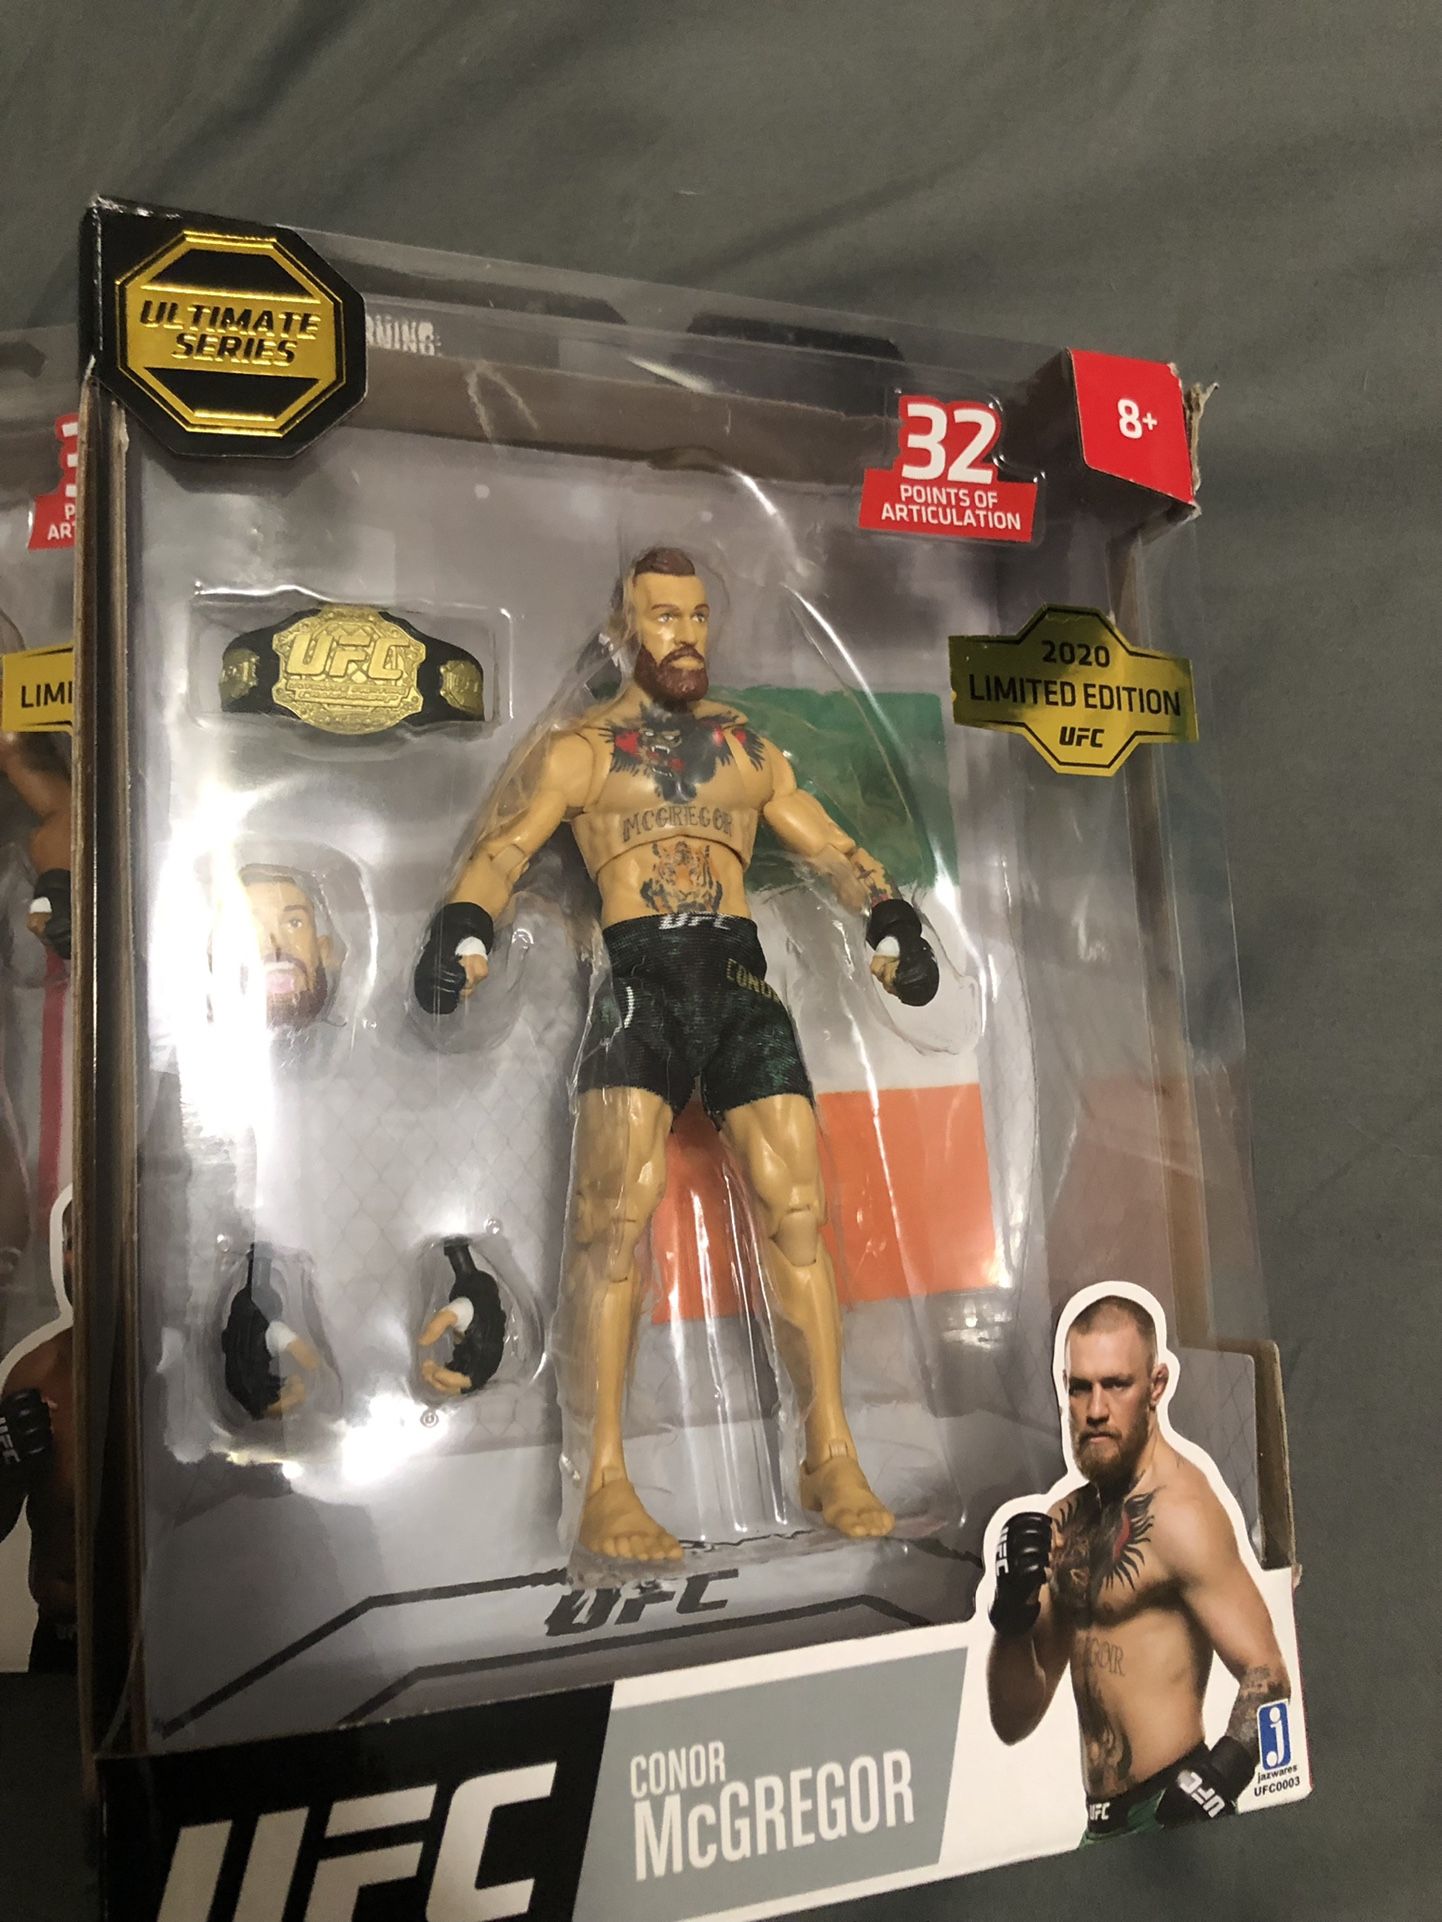 Conor McGregor UFC Action figure